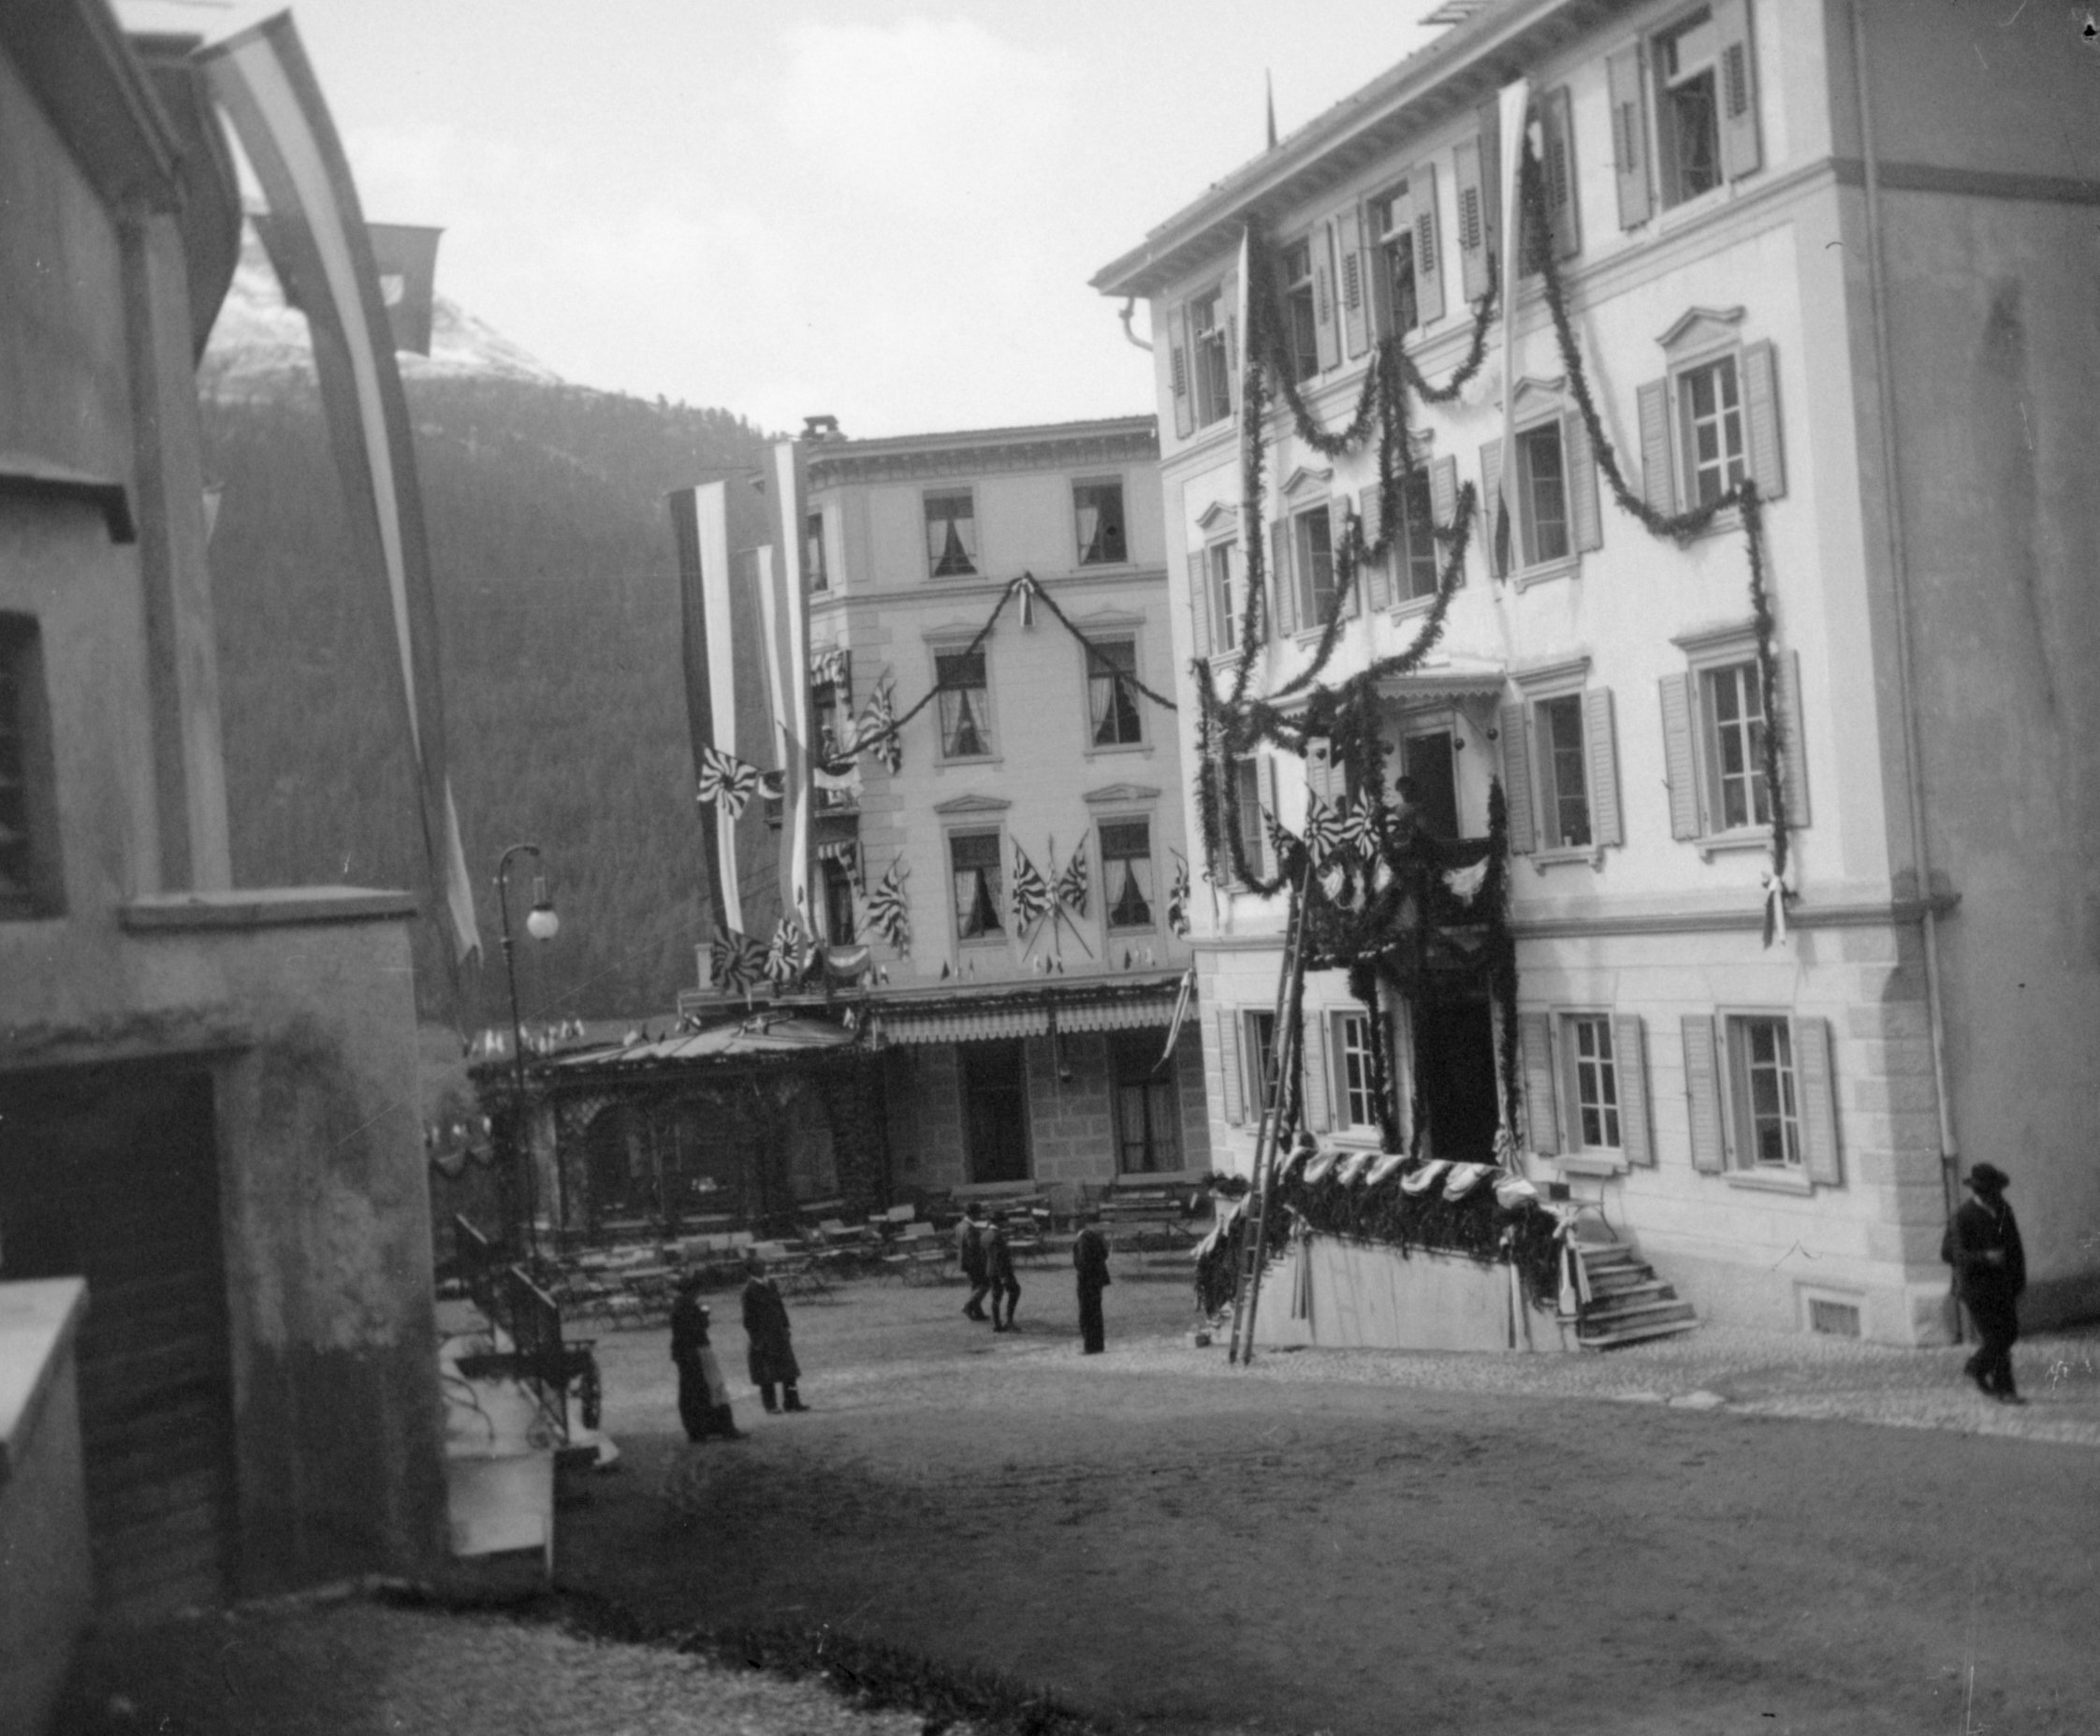 Festbeflaggung an den Hotels Weisses Kreuz und Enderlin in Pontresina (August-September 1903), 87404 sn R_o.jpg (DRM CC BY-NC-SA)